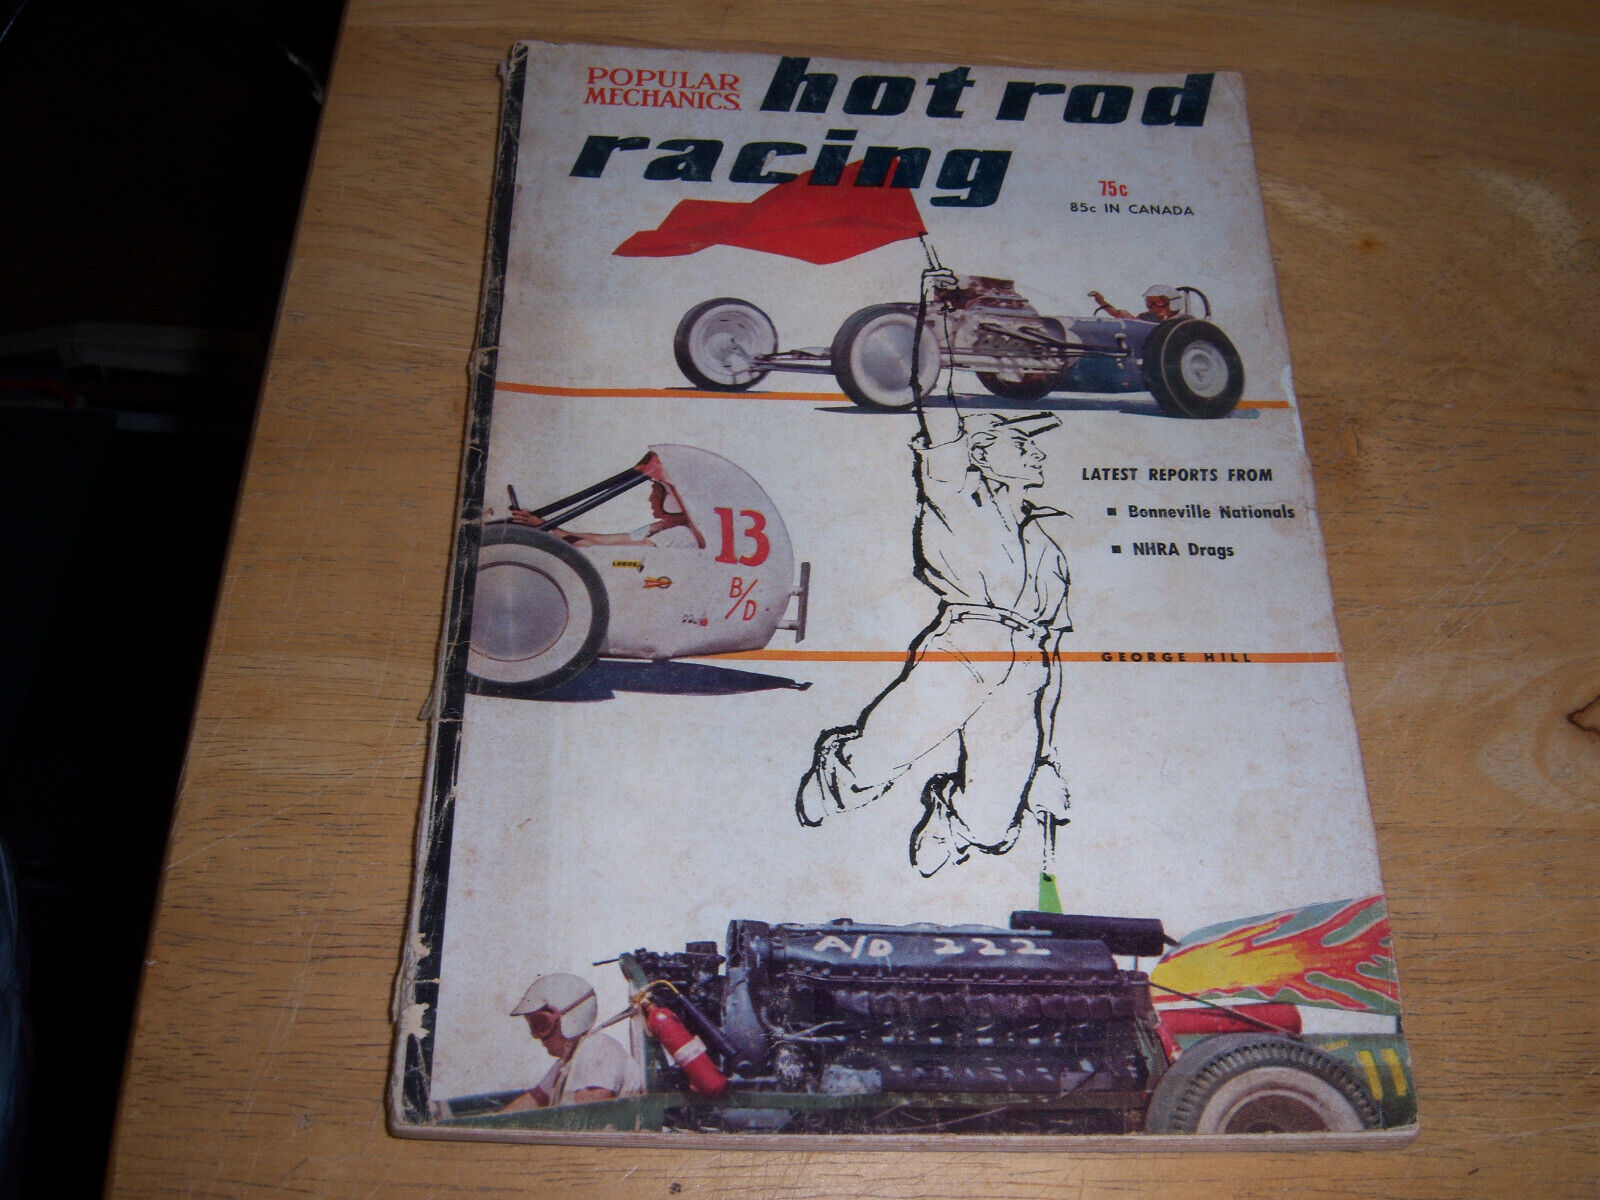 Popular Mechanics Hot Rod Racing